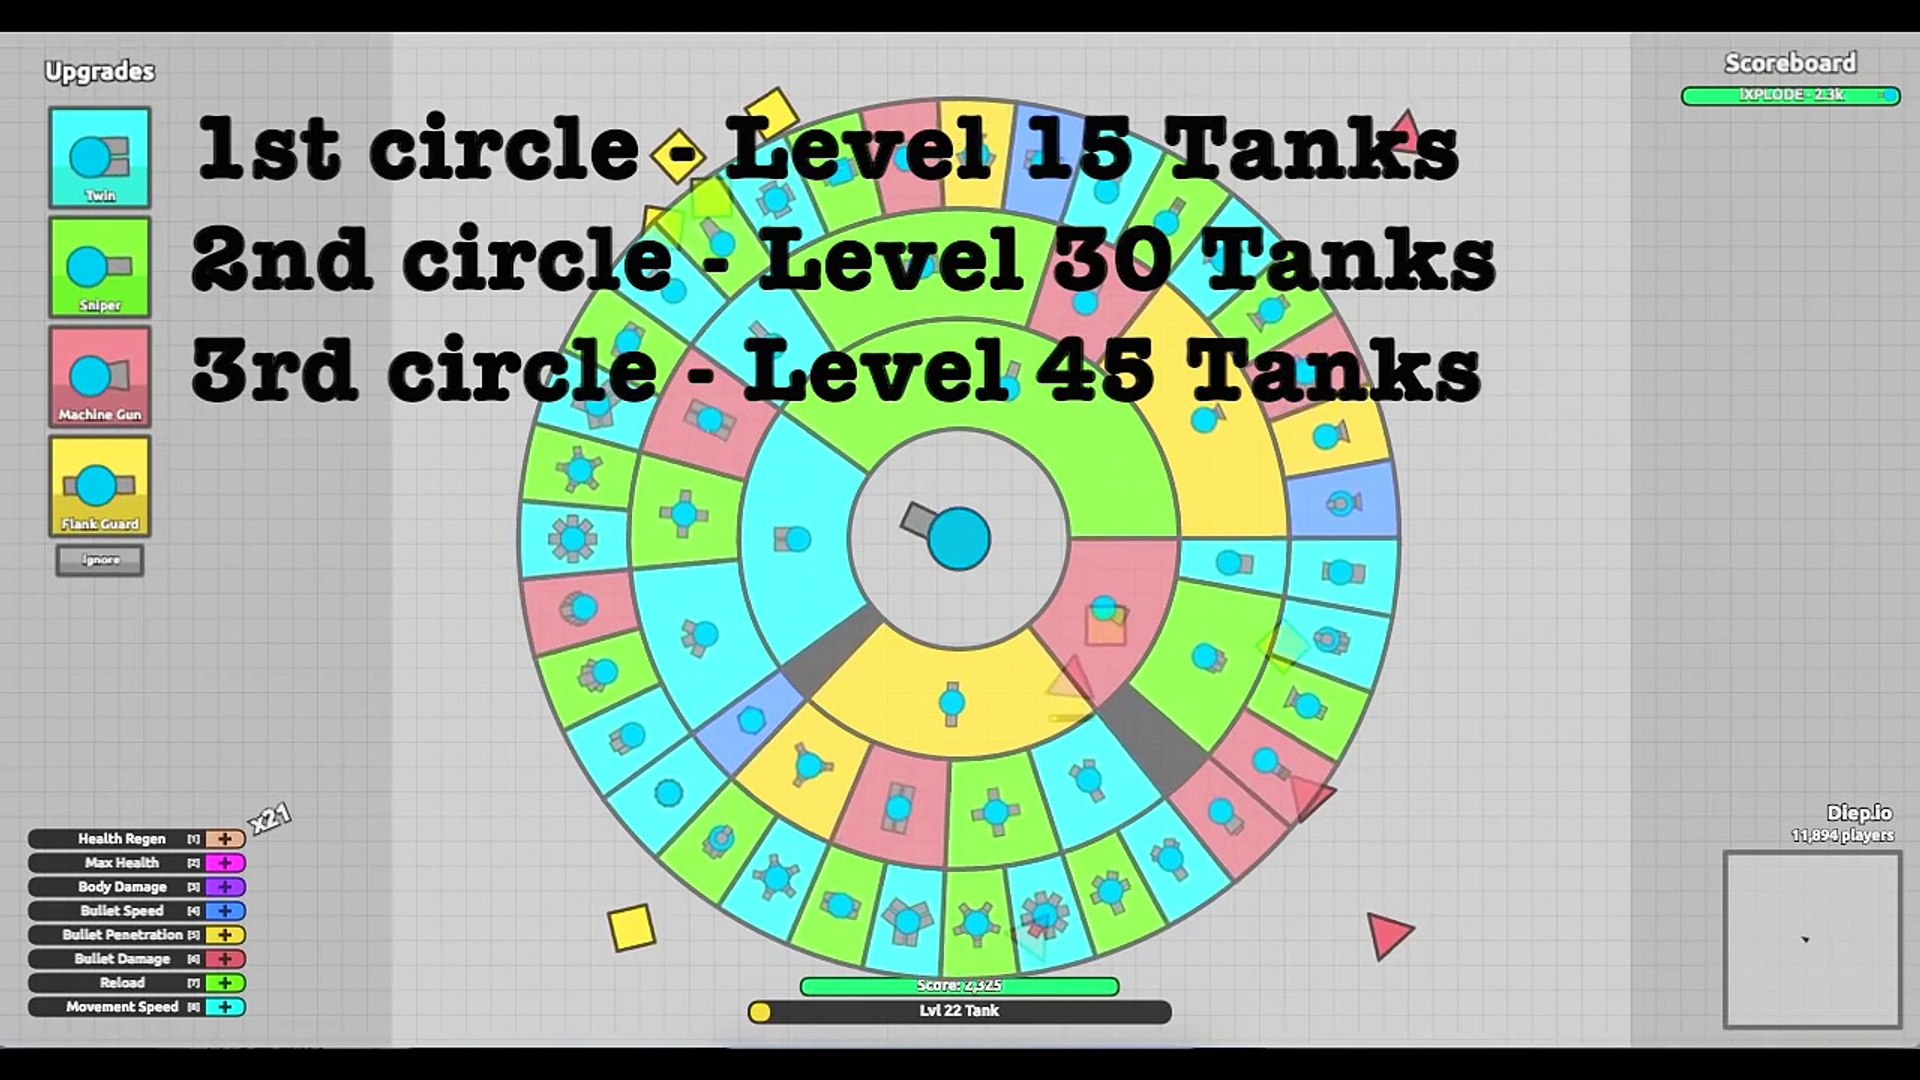 What is the best tank in Diep.io? - Quora